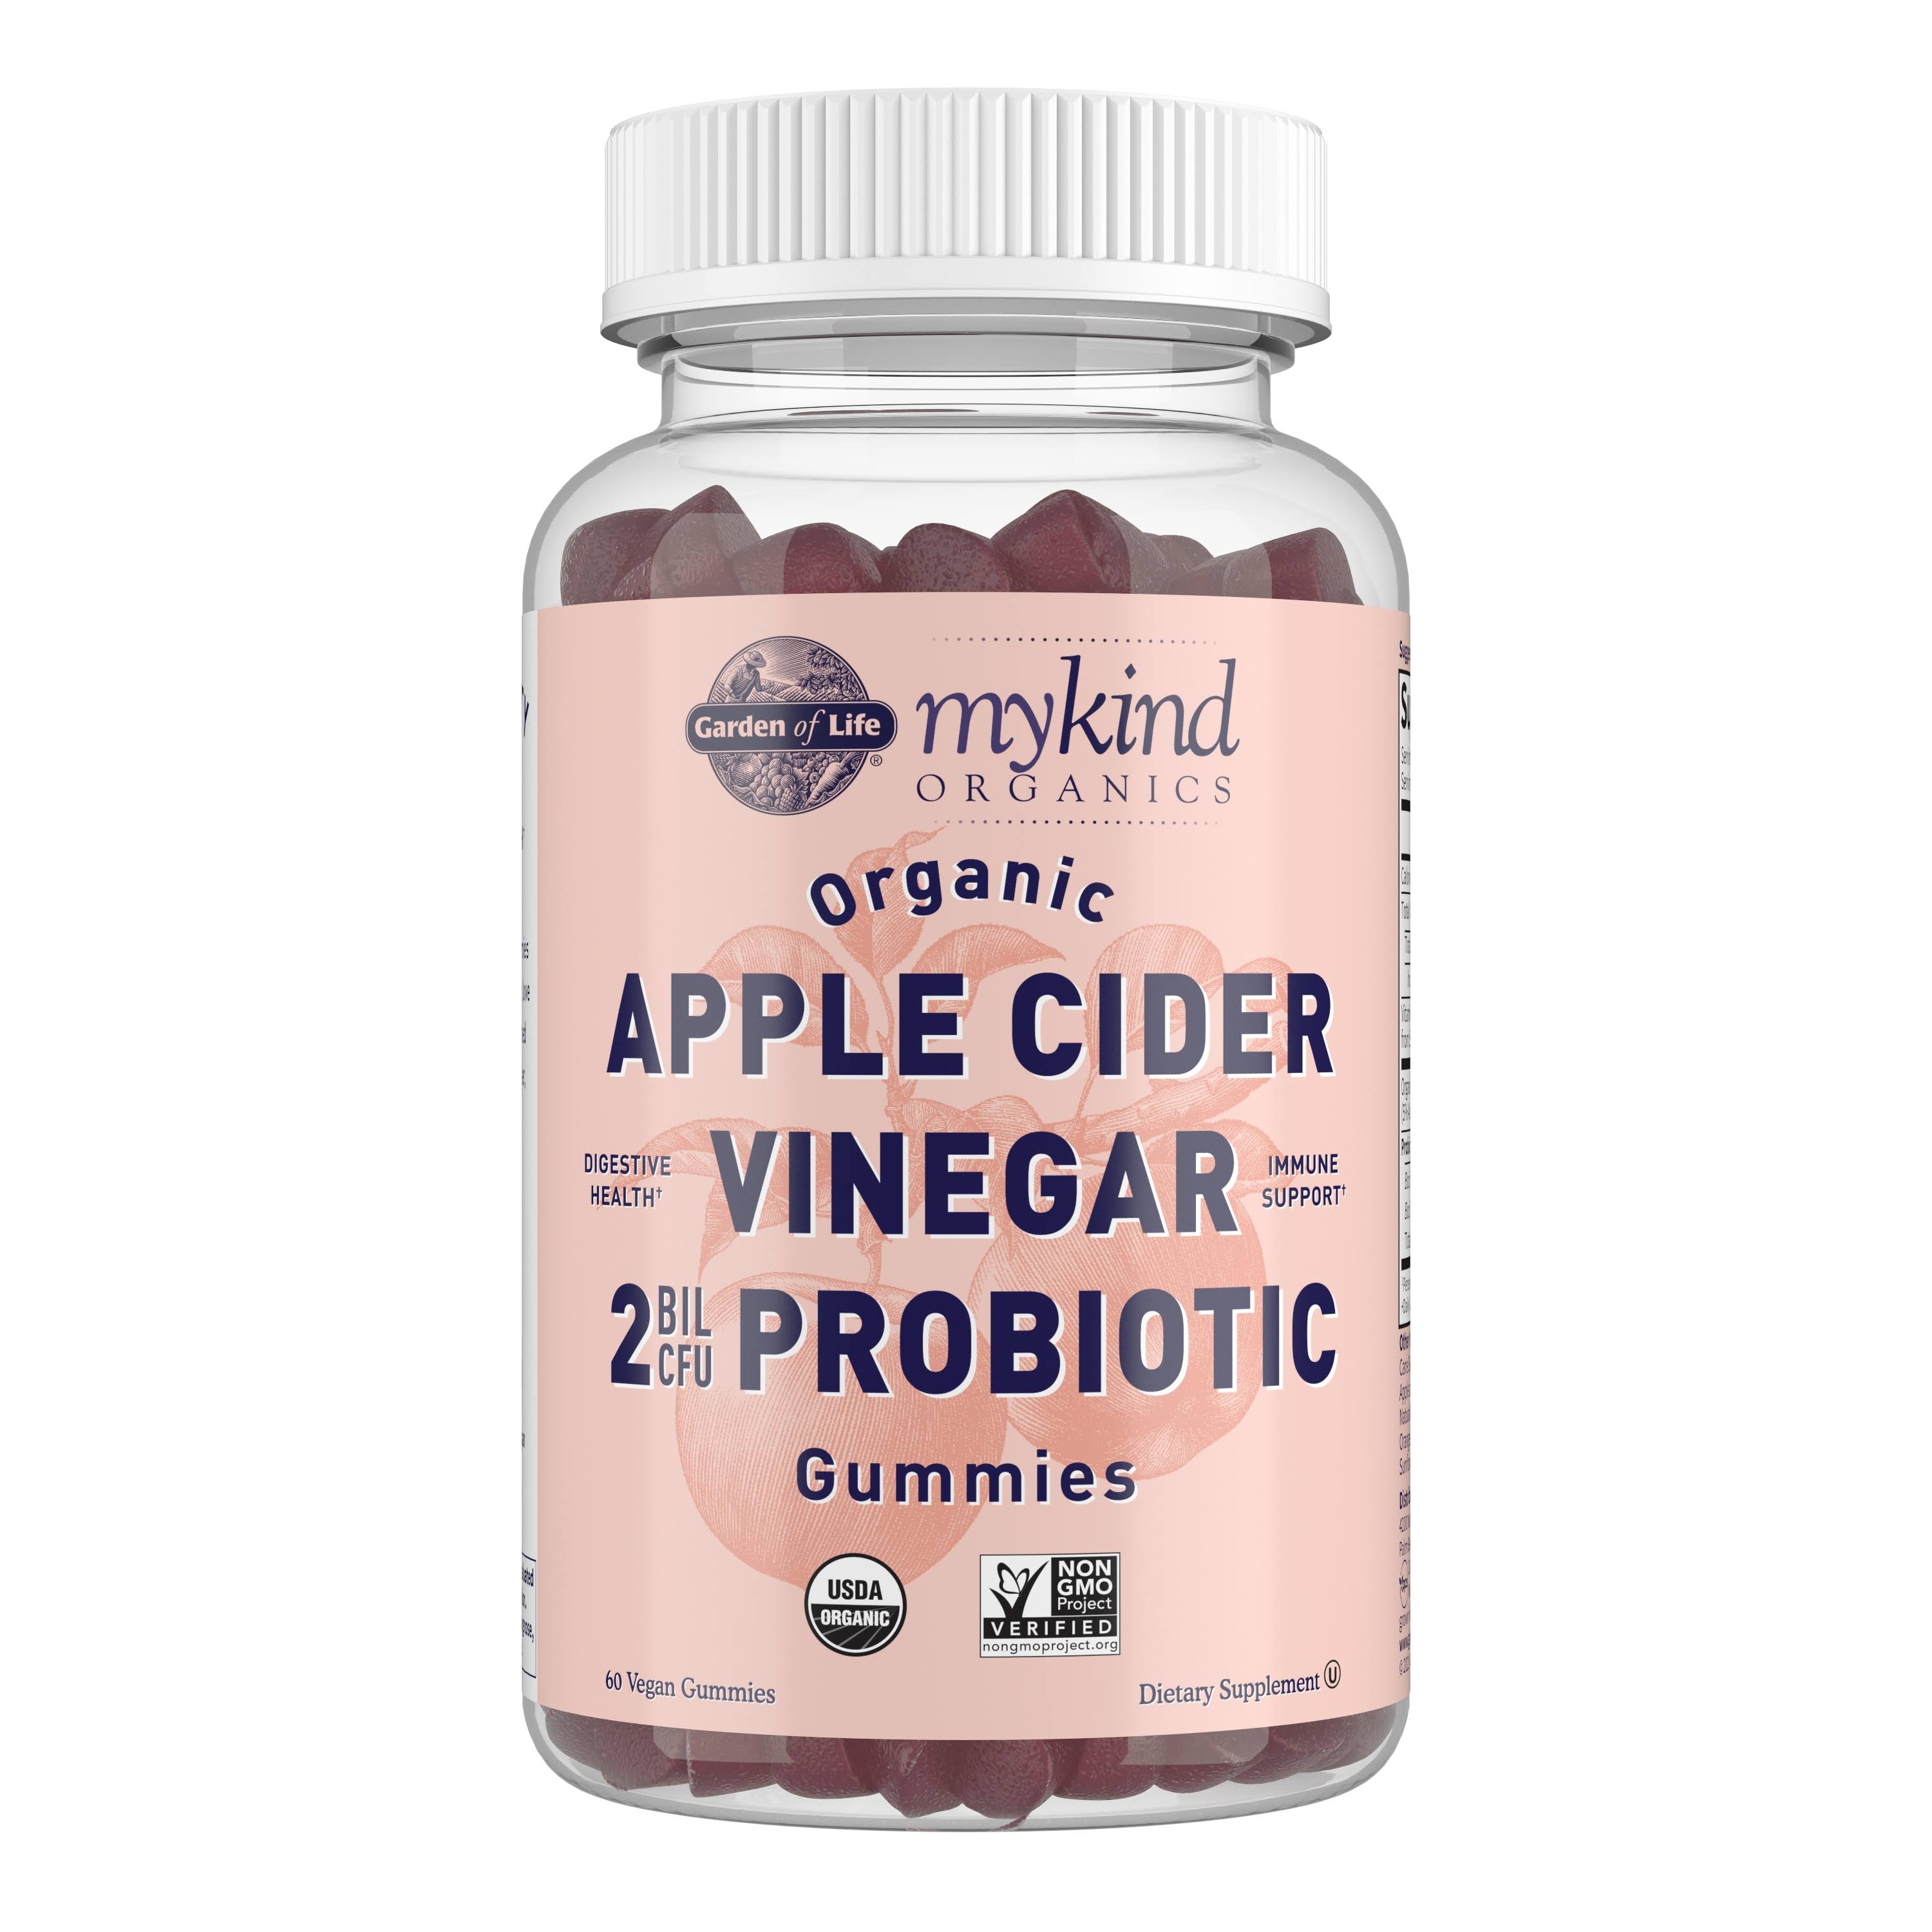 Garden Of Life MyKind Organics Apple Cider Vinegar, Probiotic, Gummies - 60 gummies